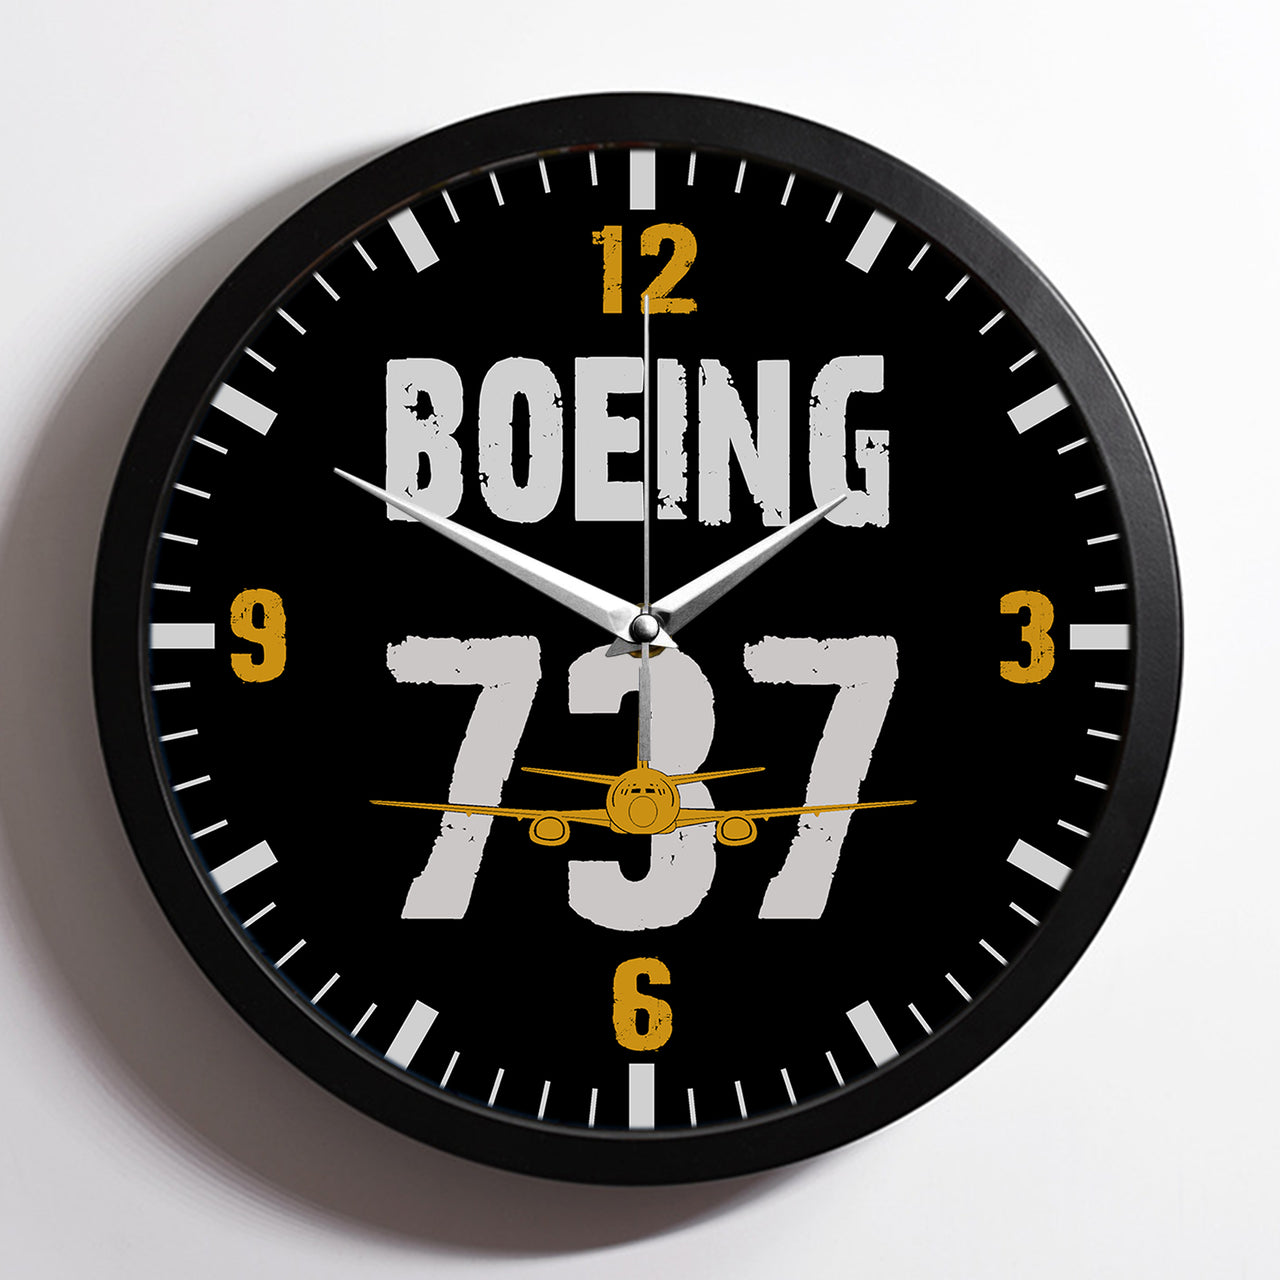 Boeing 737 Designed Designed Wall Clocks